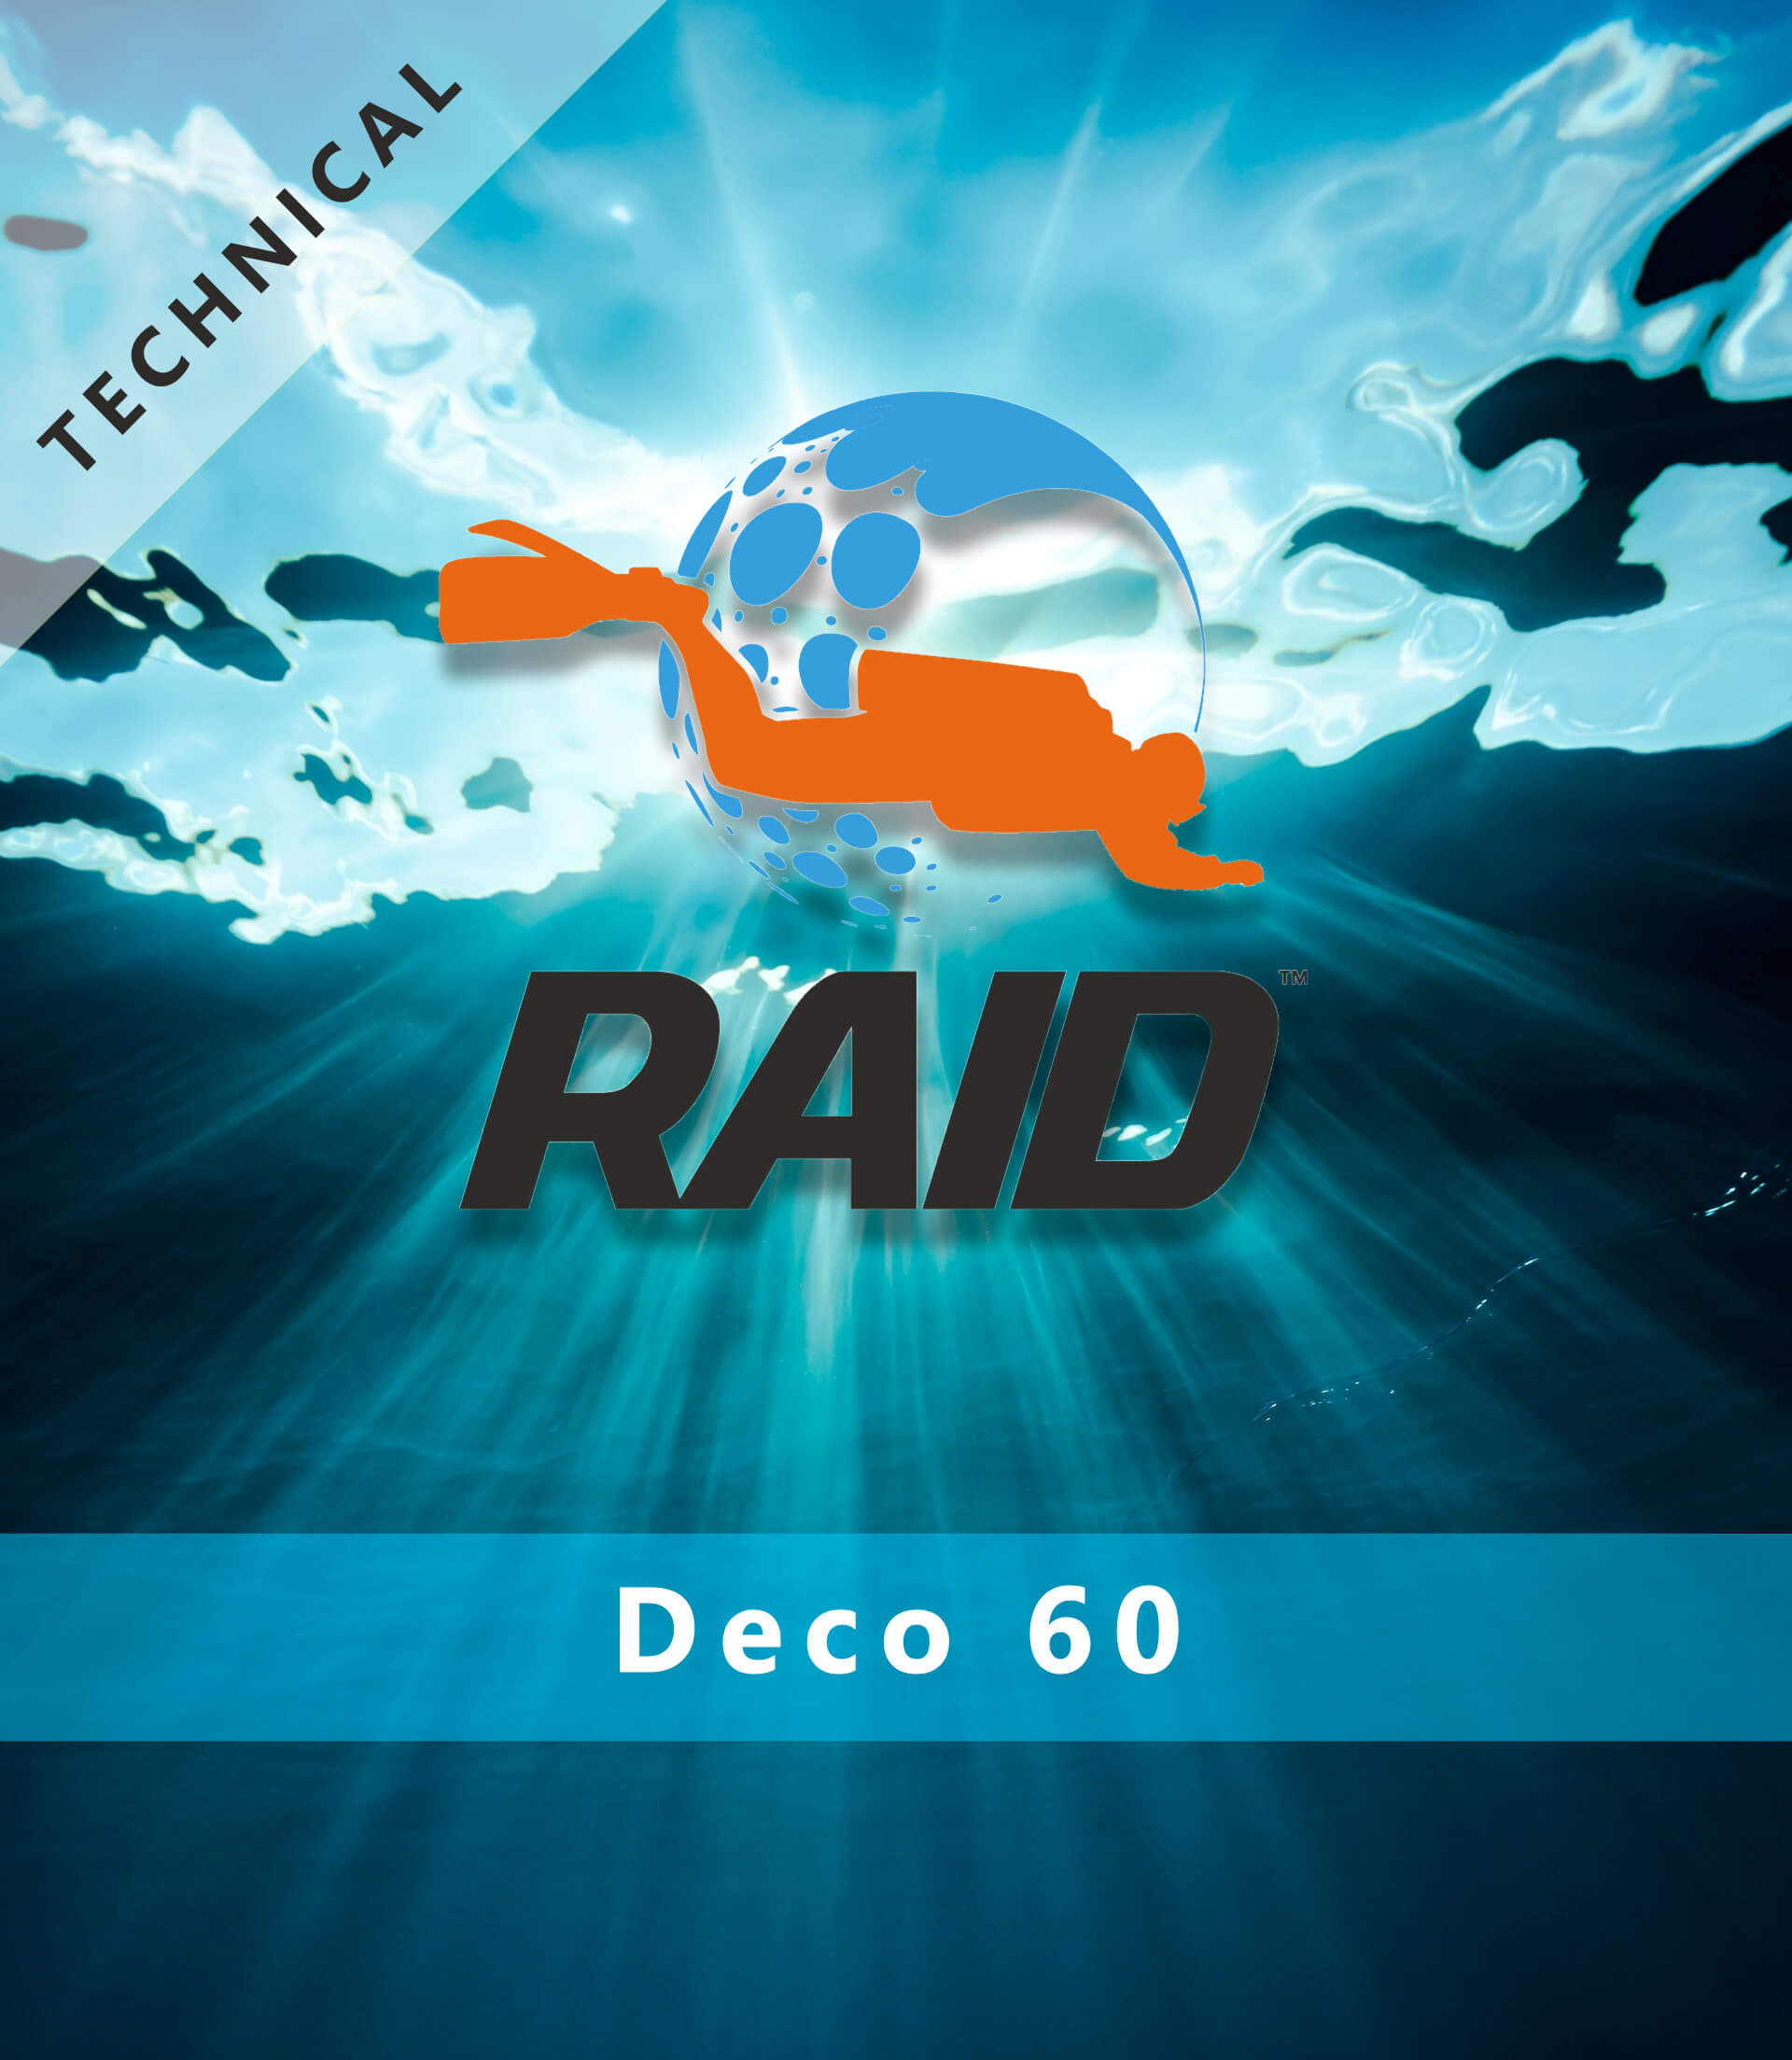 Technical / Deco 60 - RAID International Scuba Diving Course